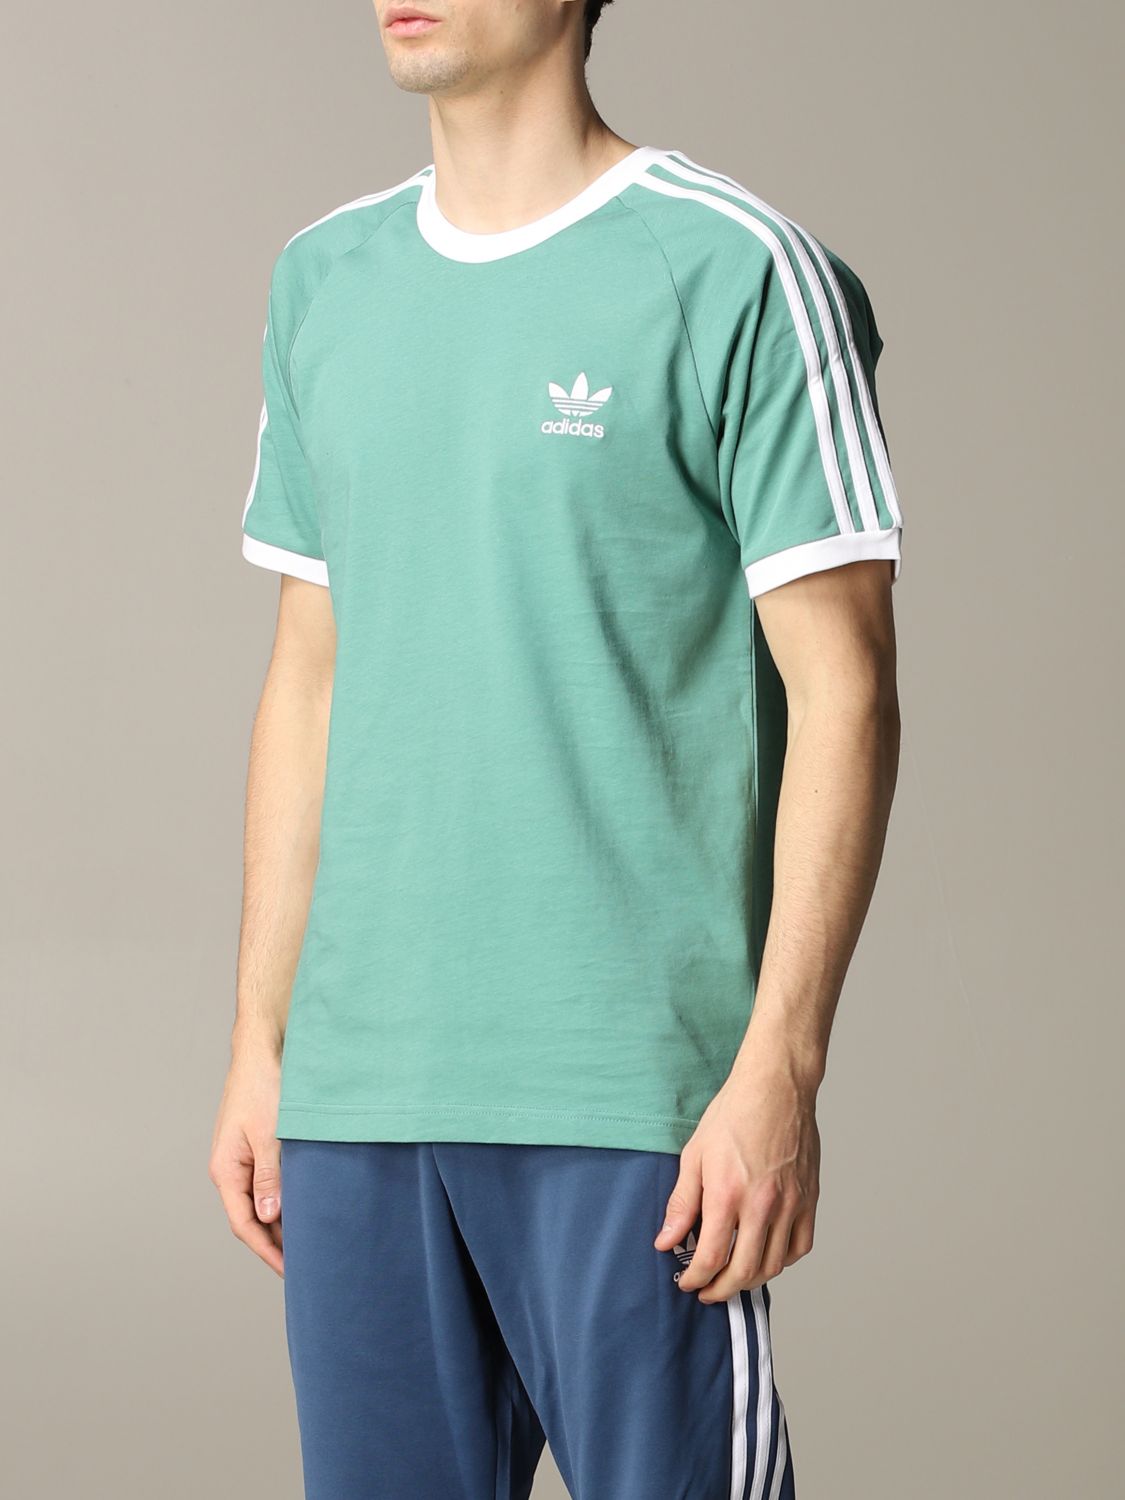 Adidas Originals Short Sleeved T Shirt With Logo T Shirt Adidas